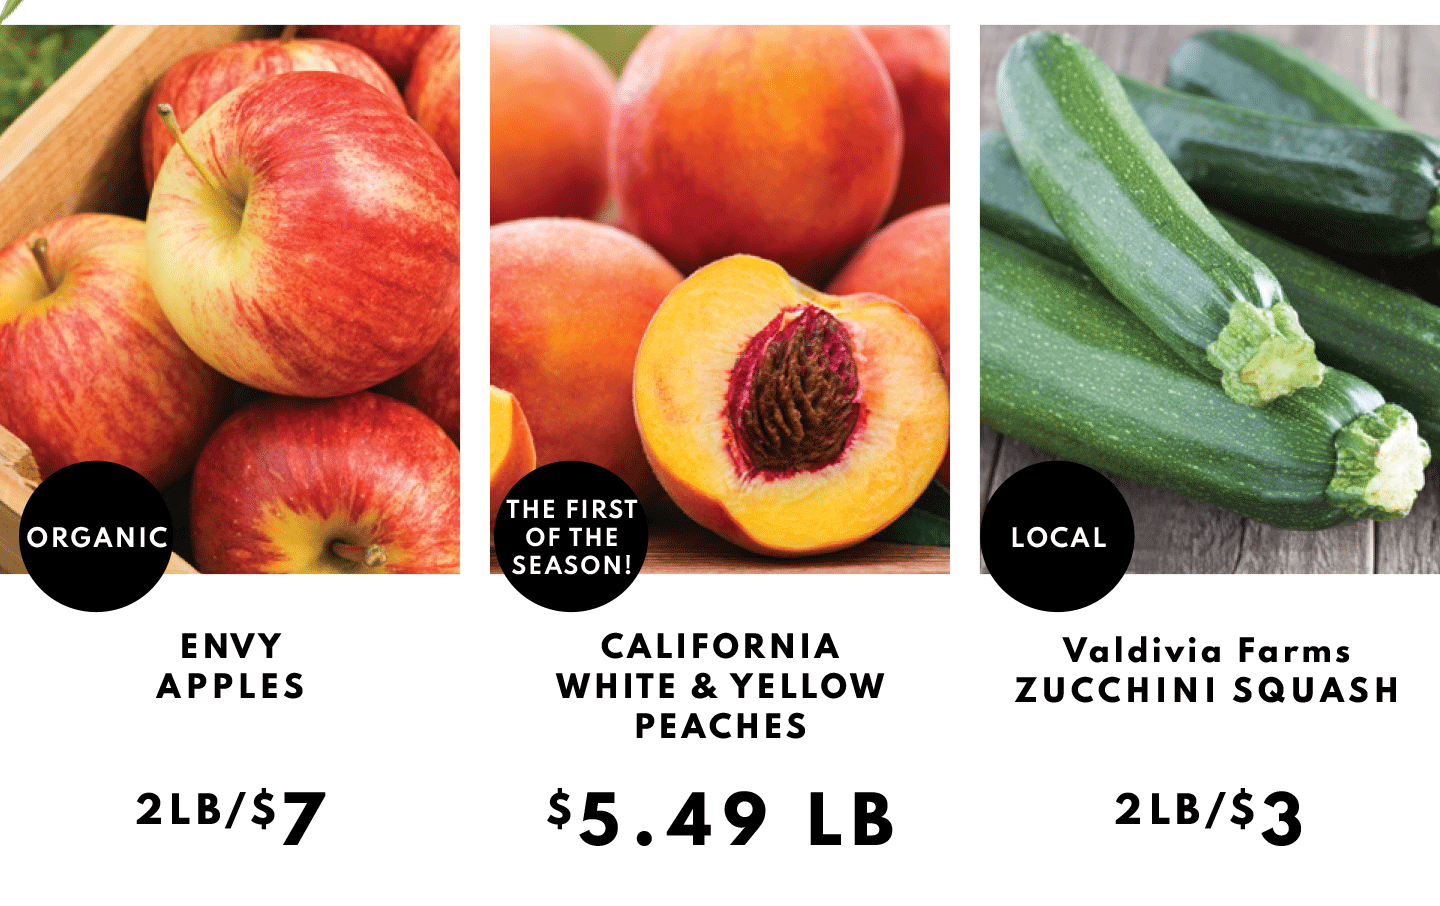 Envy Apples 2lb/$7, California White and Yellow Peaches $5.49 lb nd Valdivi Farms Zucchini Squash 2lb/$3